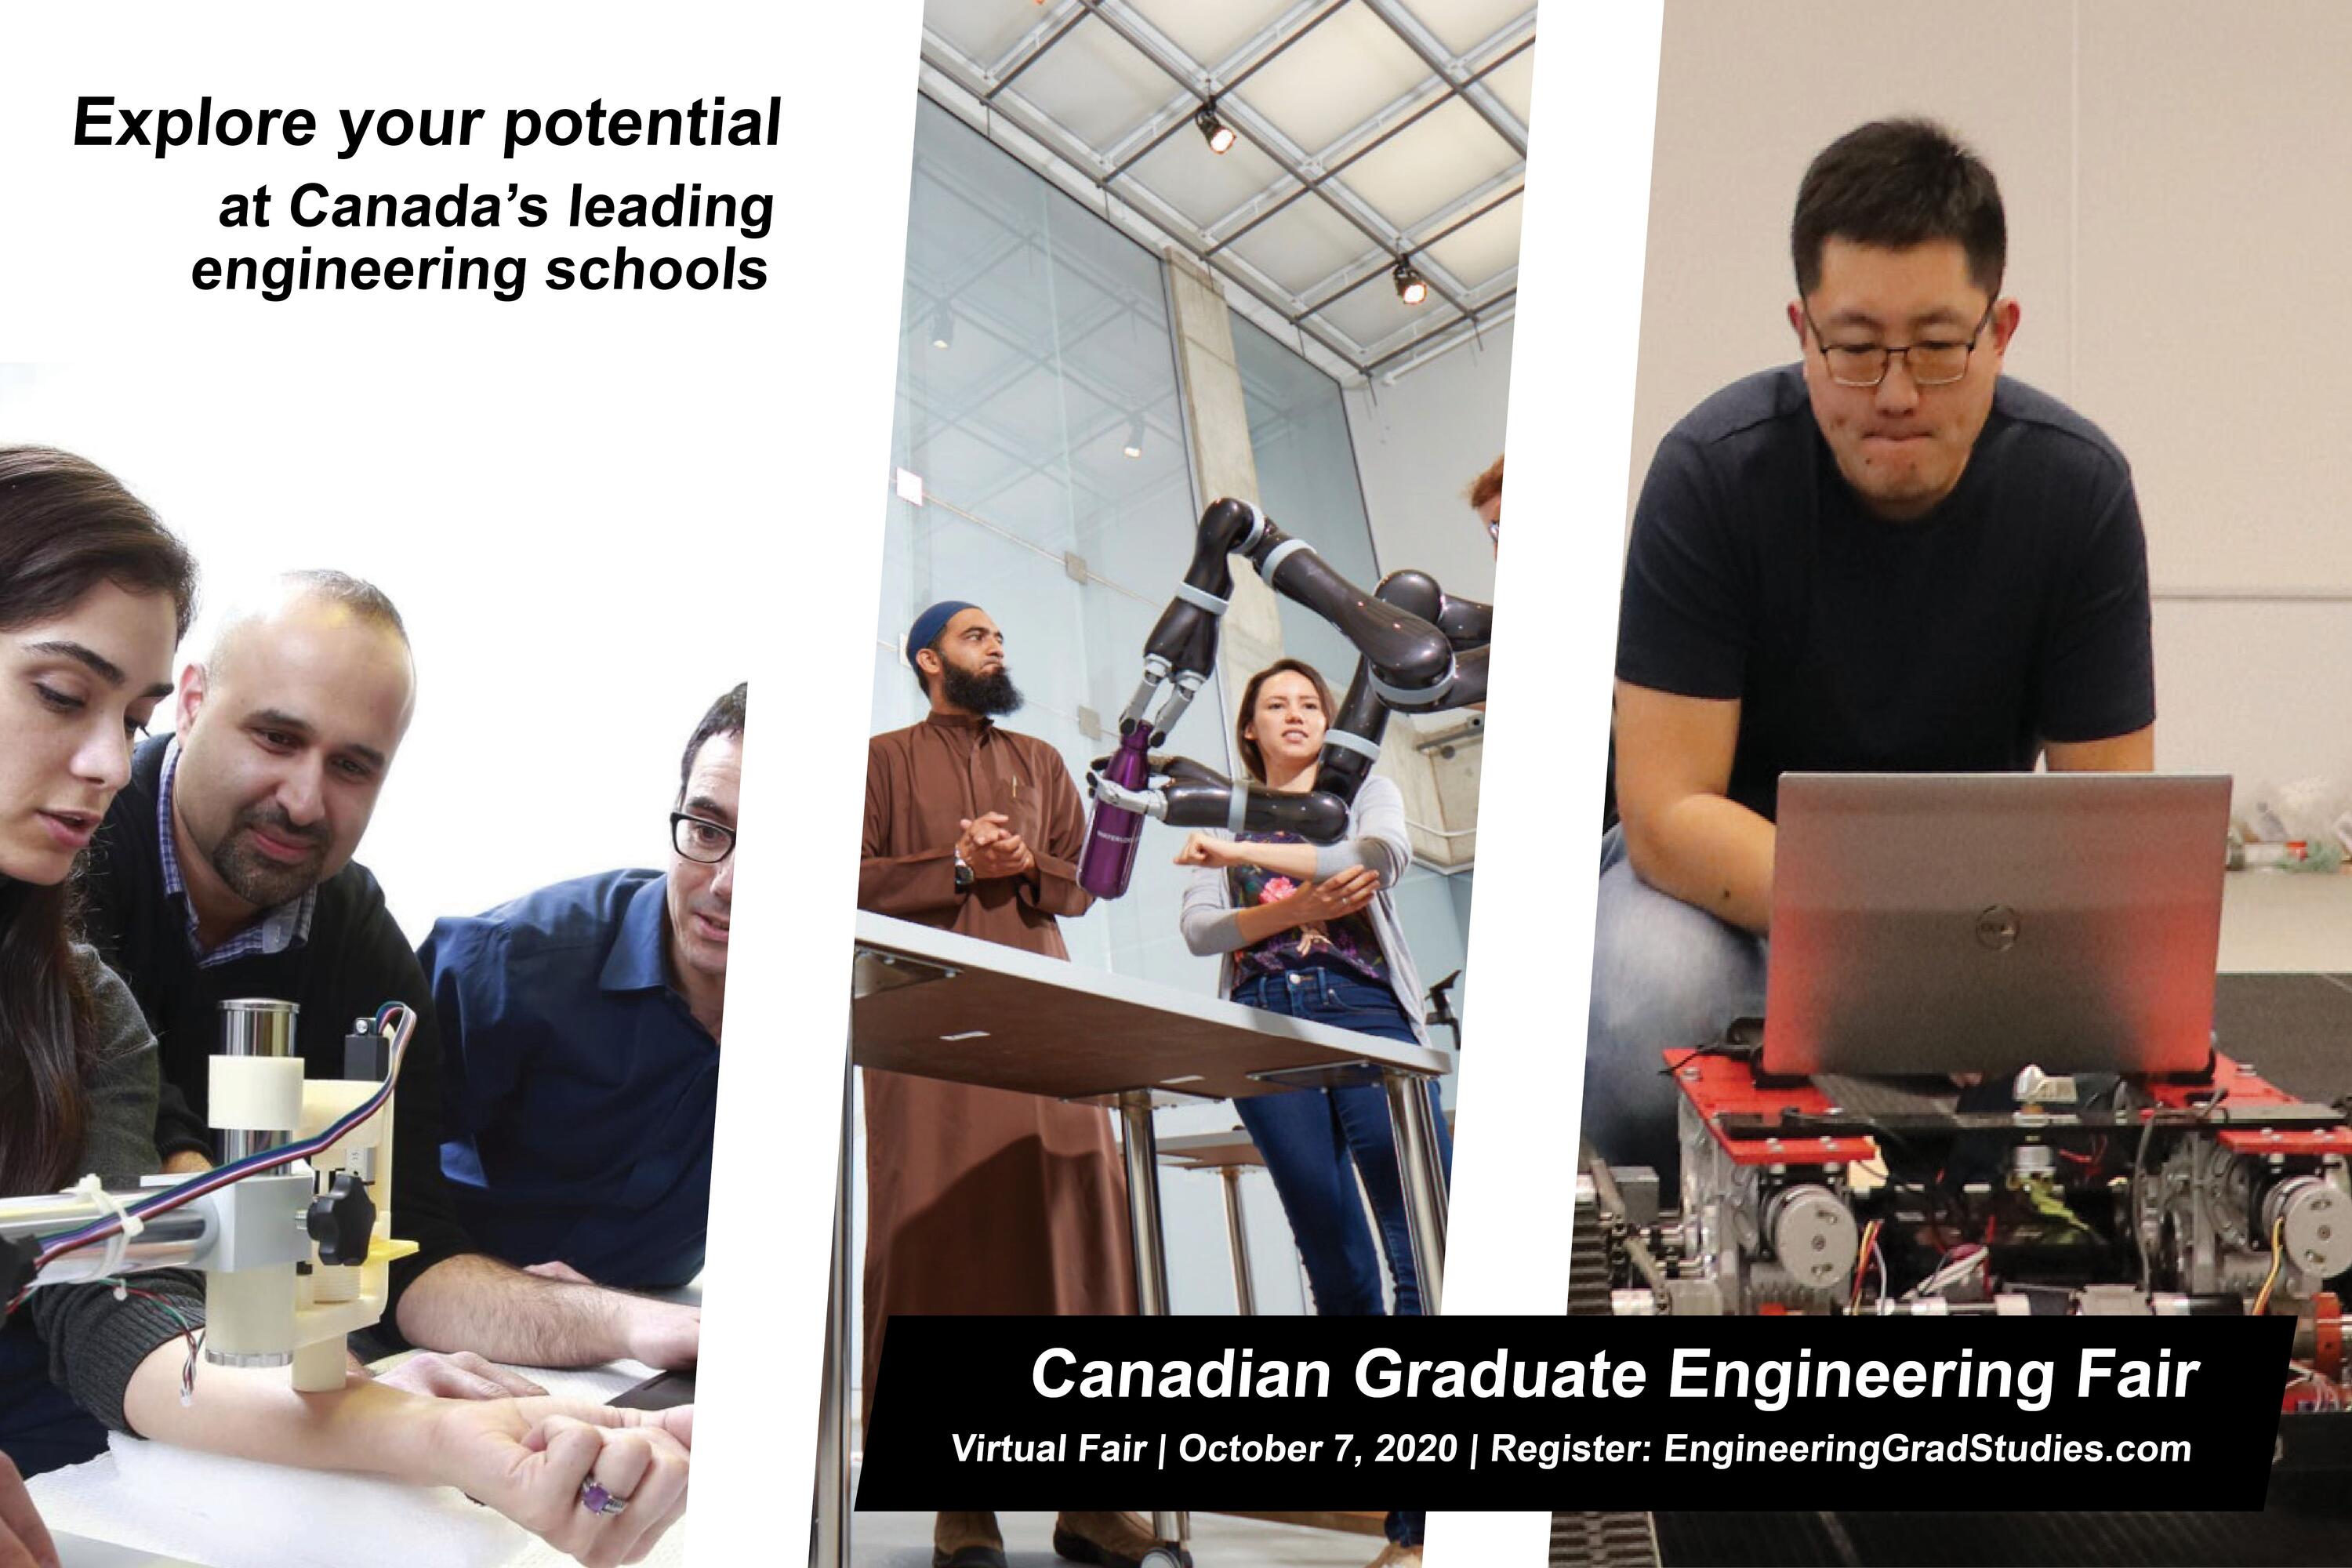 Canadian Engineering Graduate Studies Event, October 7